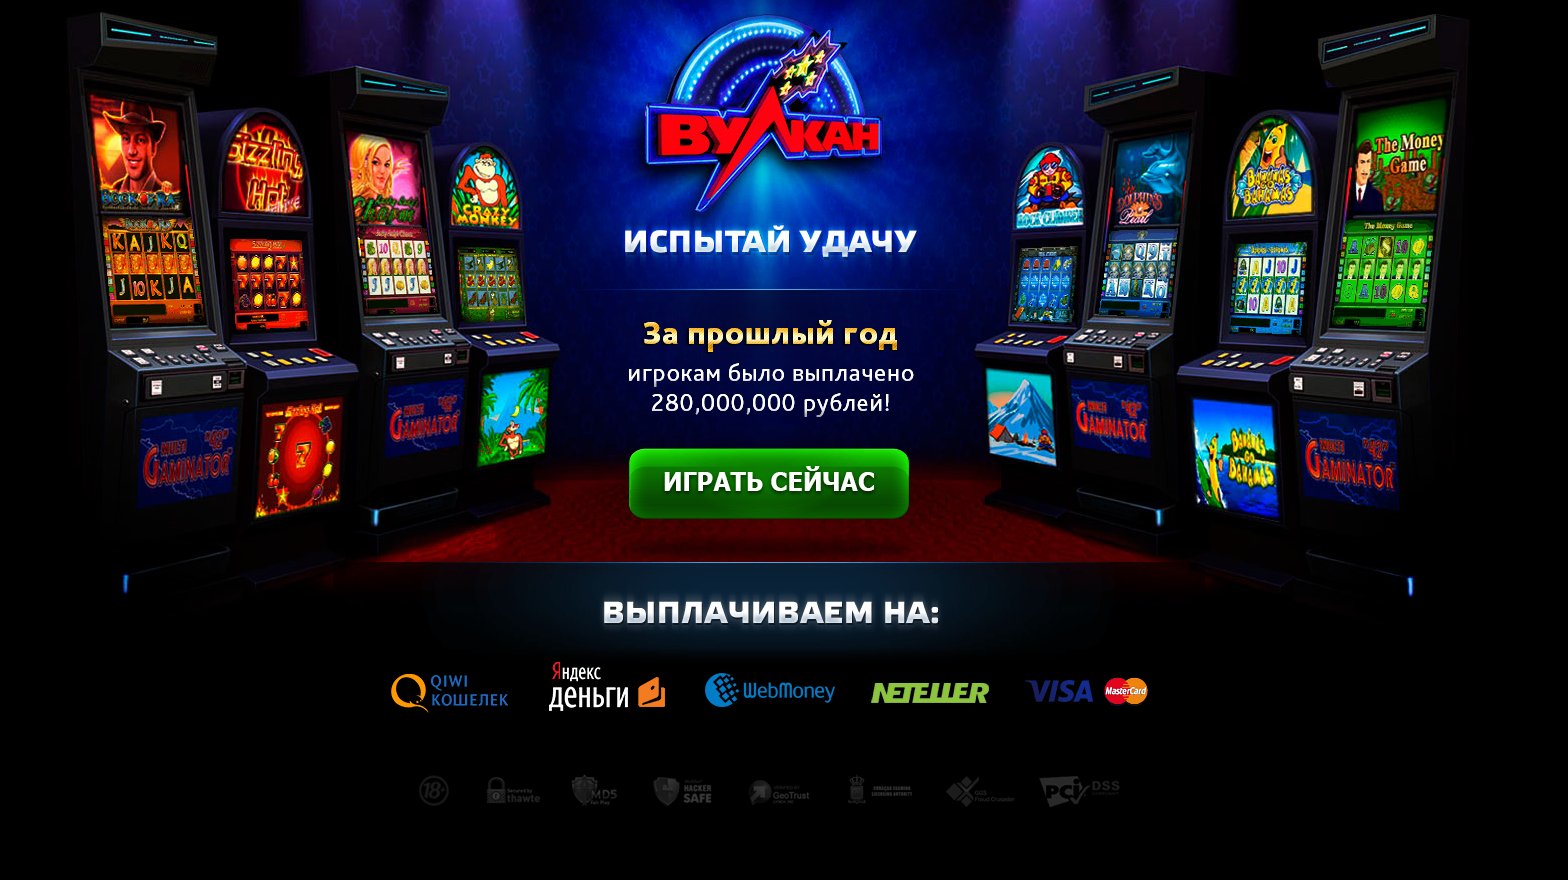 Реклама в опере казино вулкан оракул казино азов сити играть онлайн